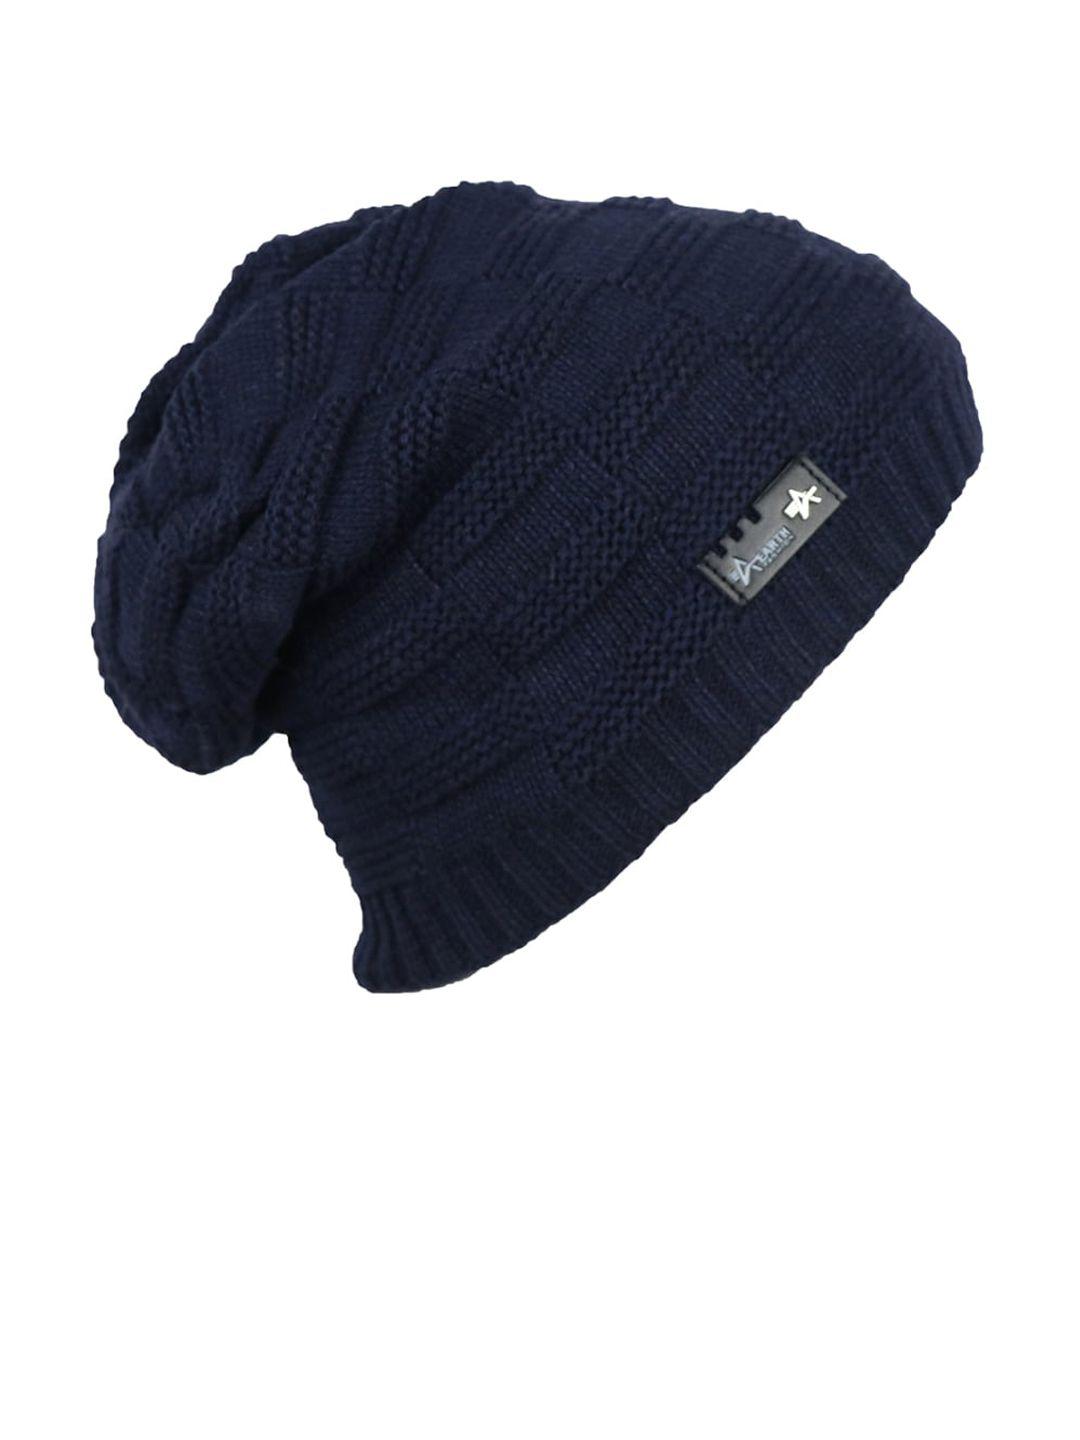 isweven unisex navy blue self-design beanie cap